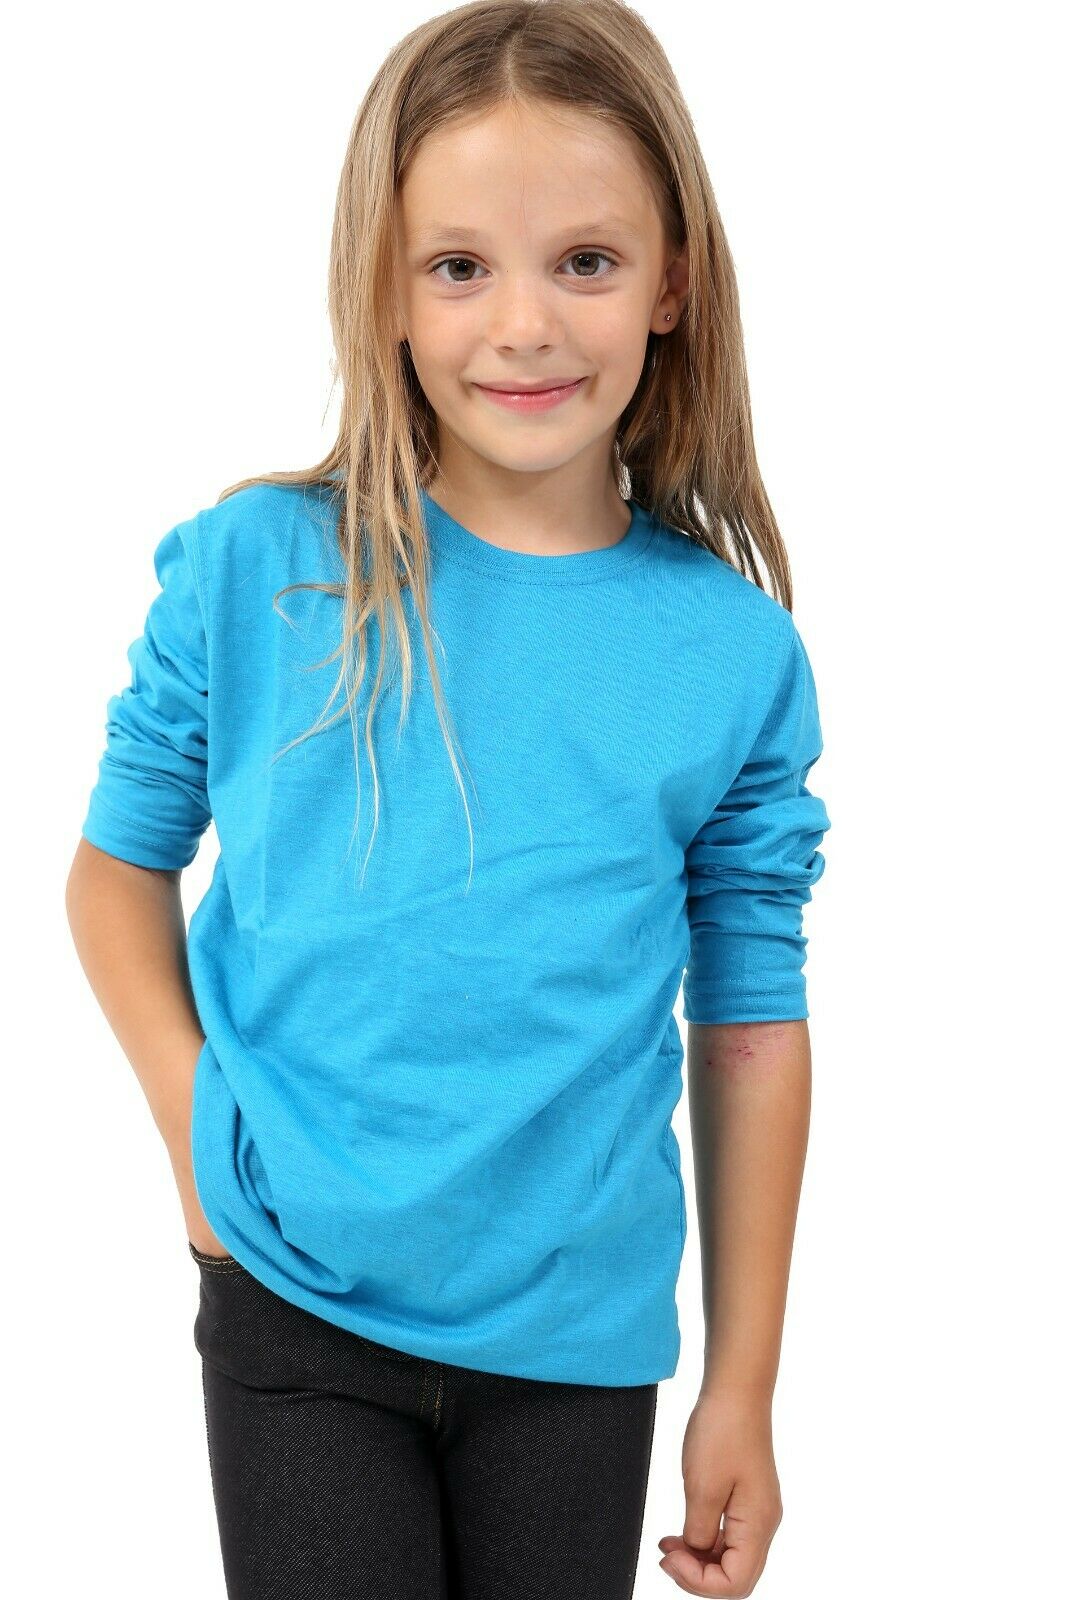 Kids Plain Basic Top Long Sleeve Girls Boys Uniform T-Shirt Tops 2-13 Years 2-3 Years, Lemon